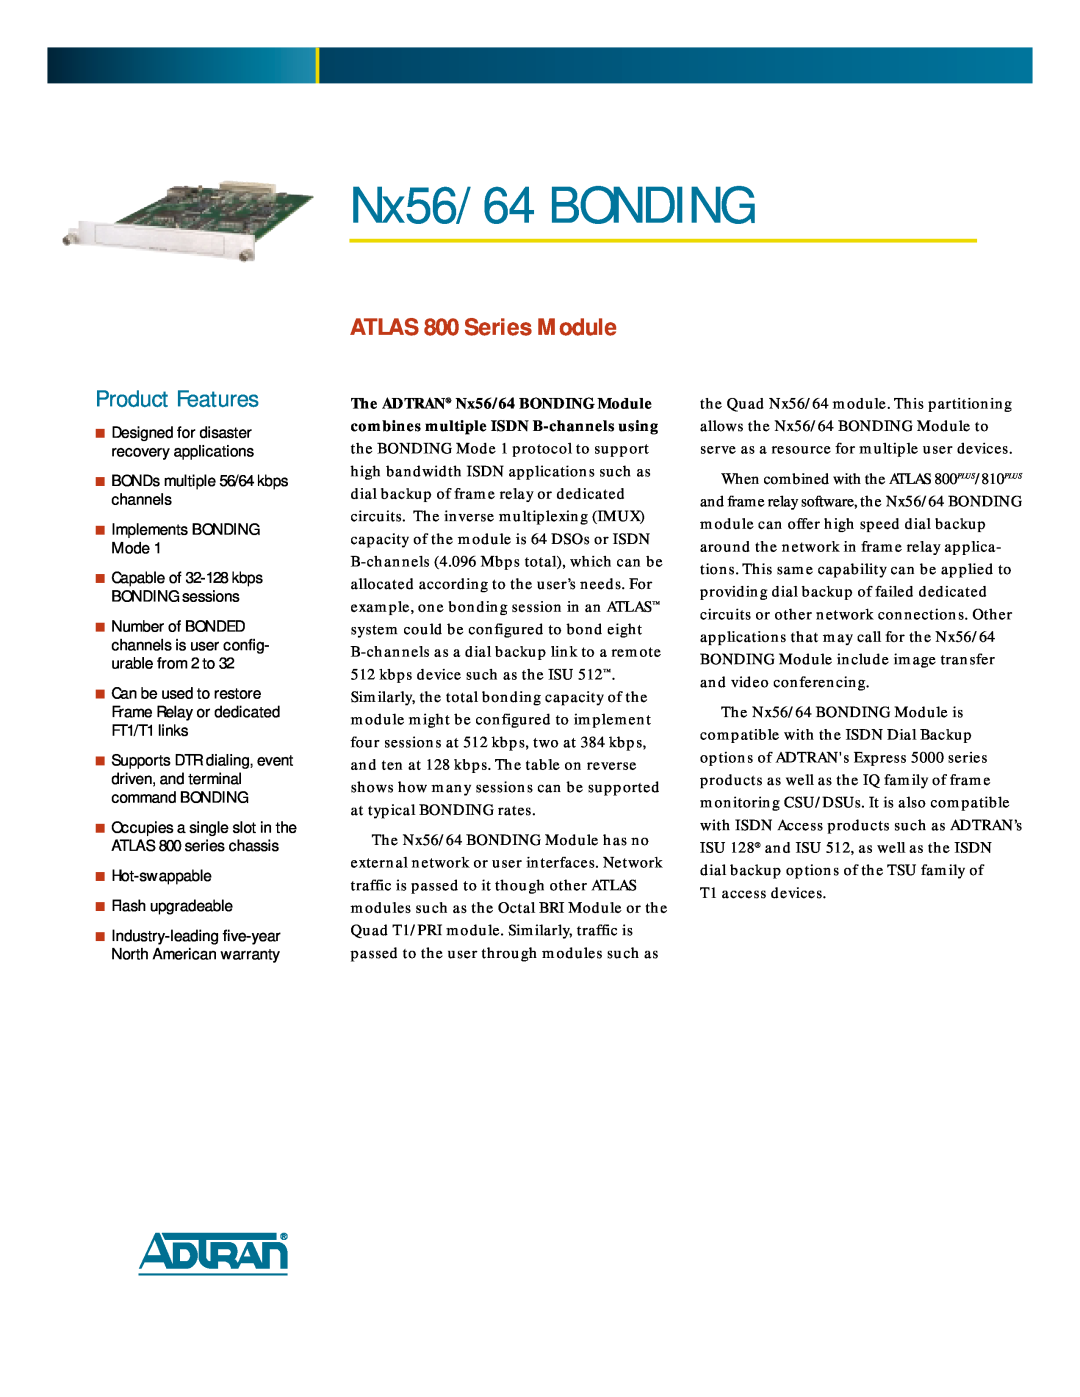 ADTRAN Nx56/64 Bonding warranty Nx56/64 BONDING, Product Features, ATLAS 800 Series Module 